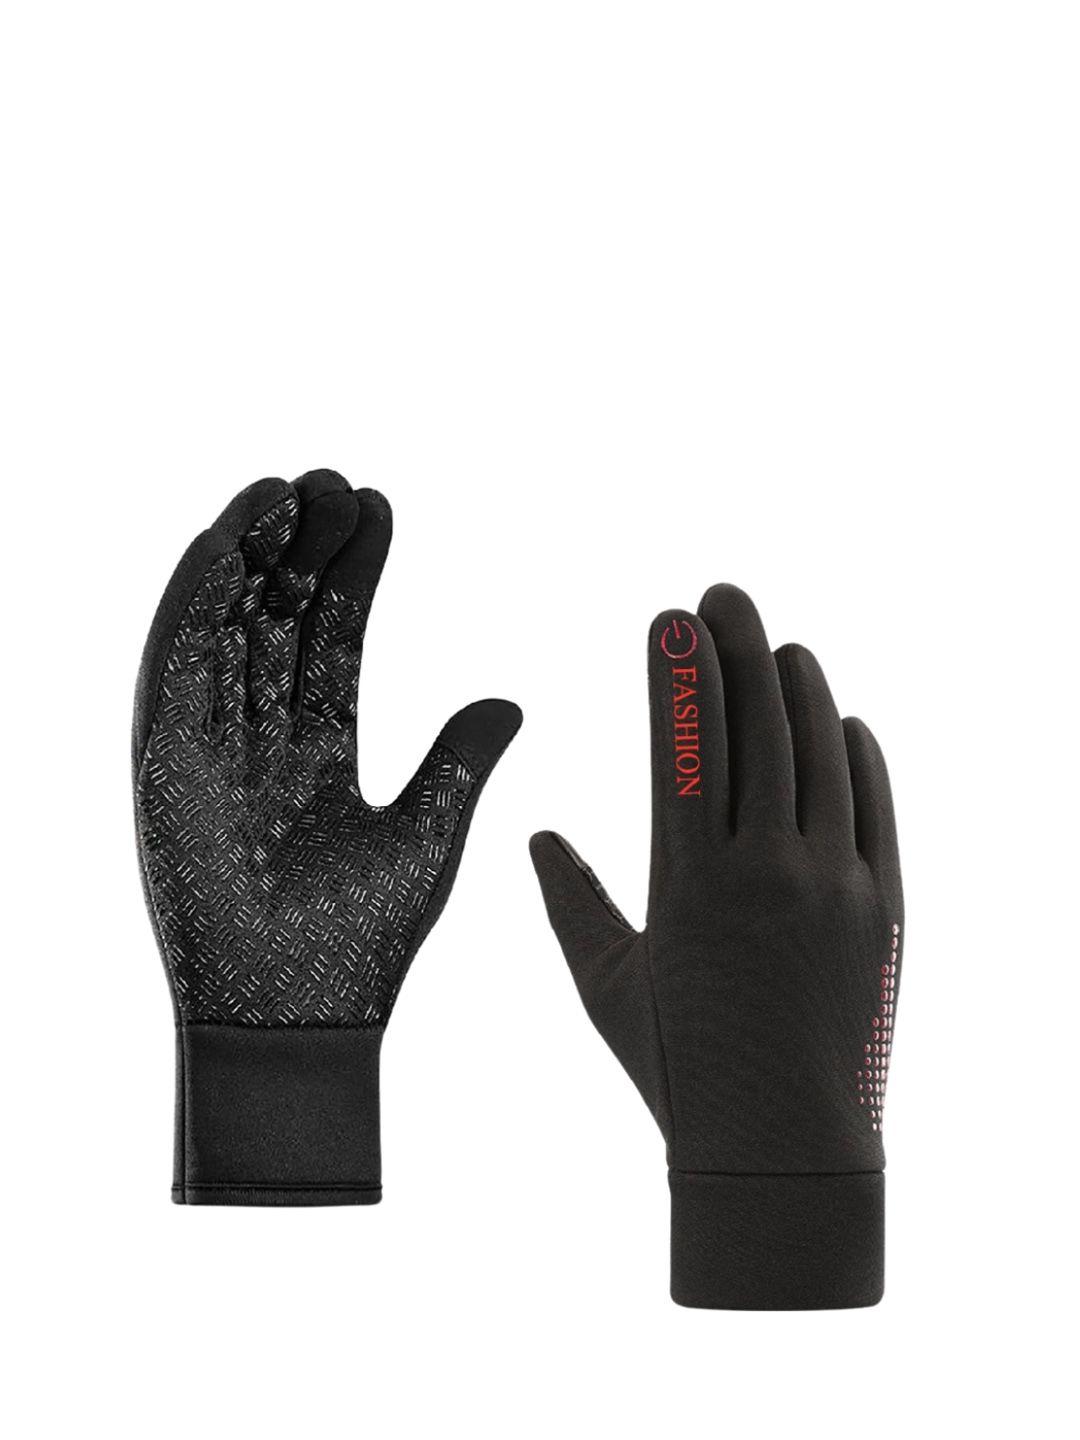 alexvyan men printed protective riding gloves